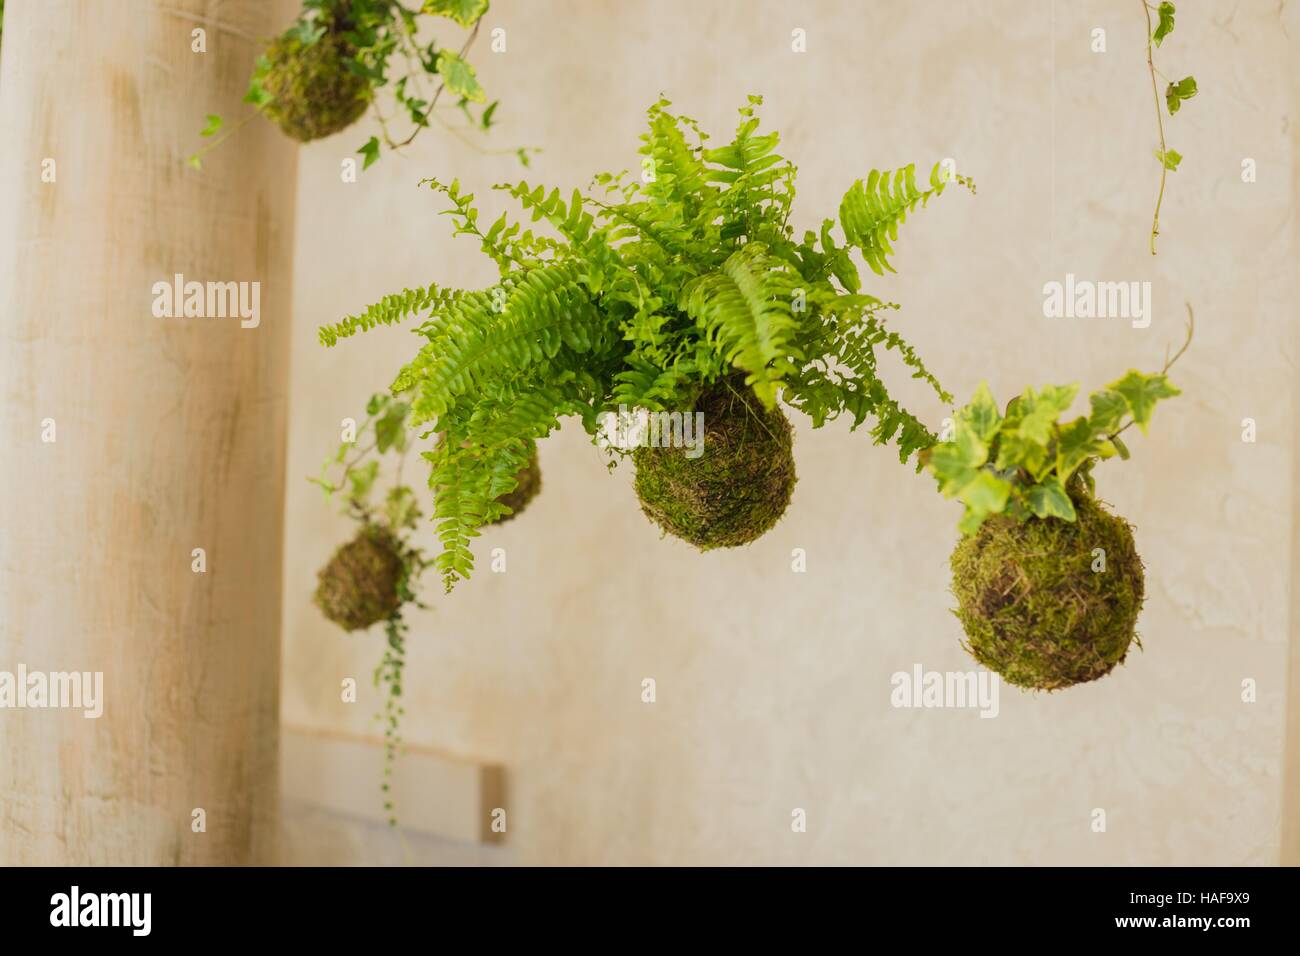 Decorative green shrub in form of ball Stock Photo